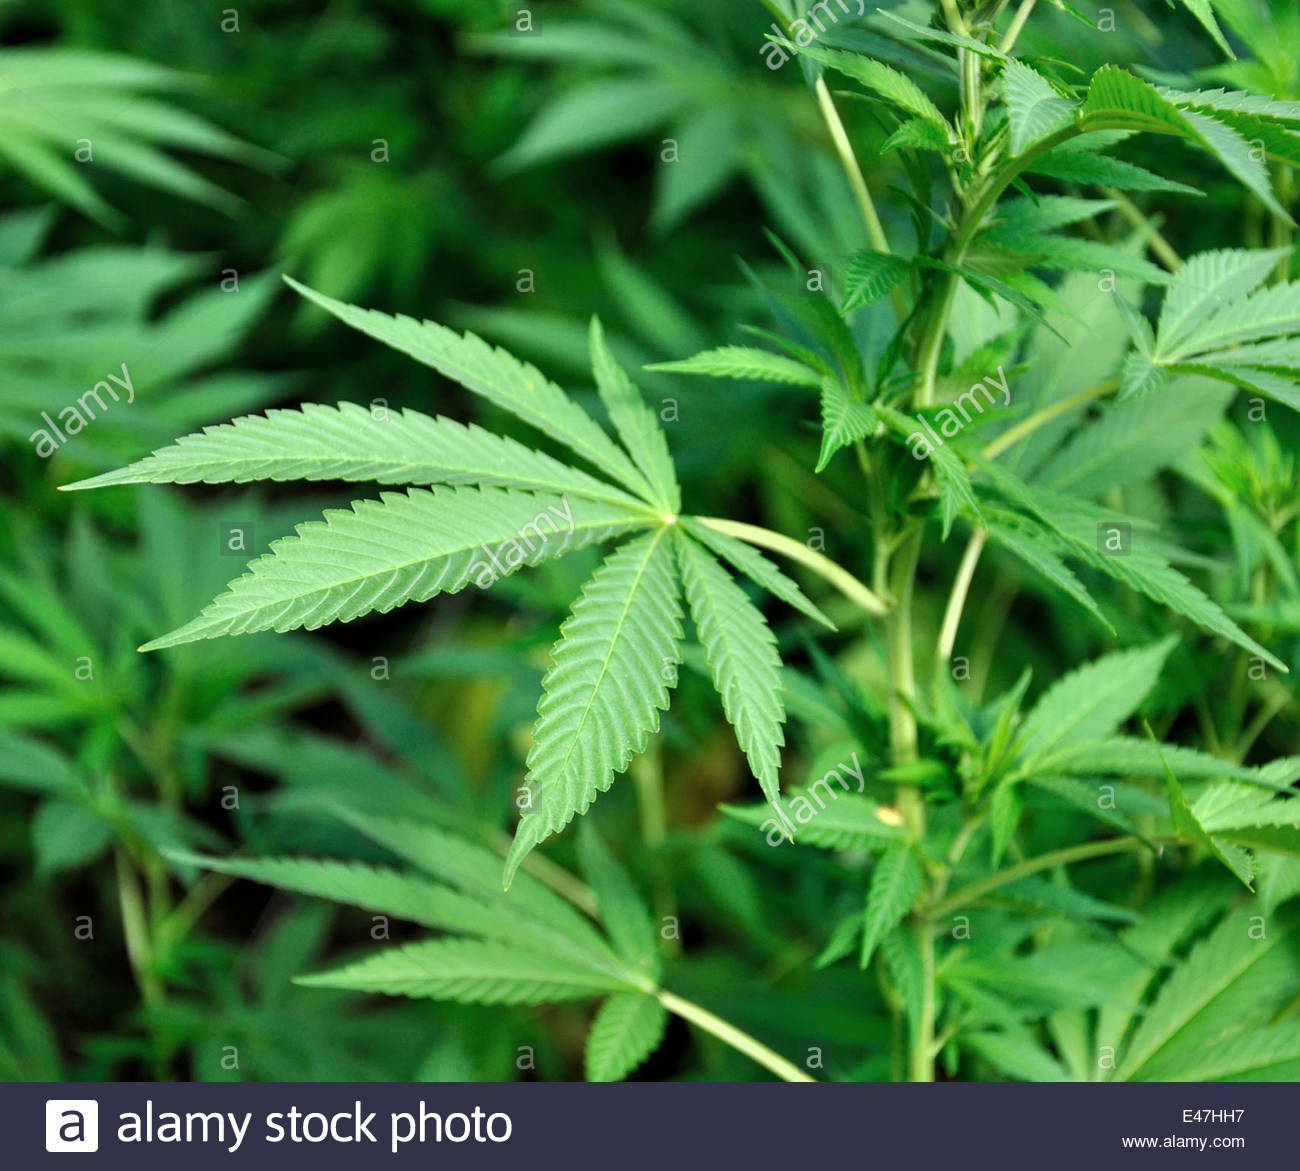 Healthy Marijuana Plant Green Leaves Hemp Background Stock